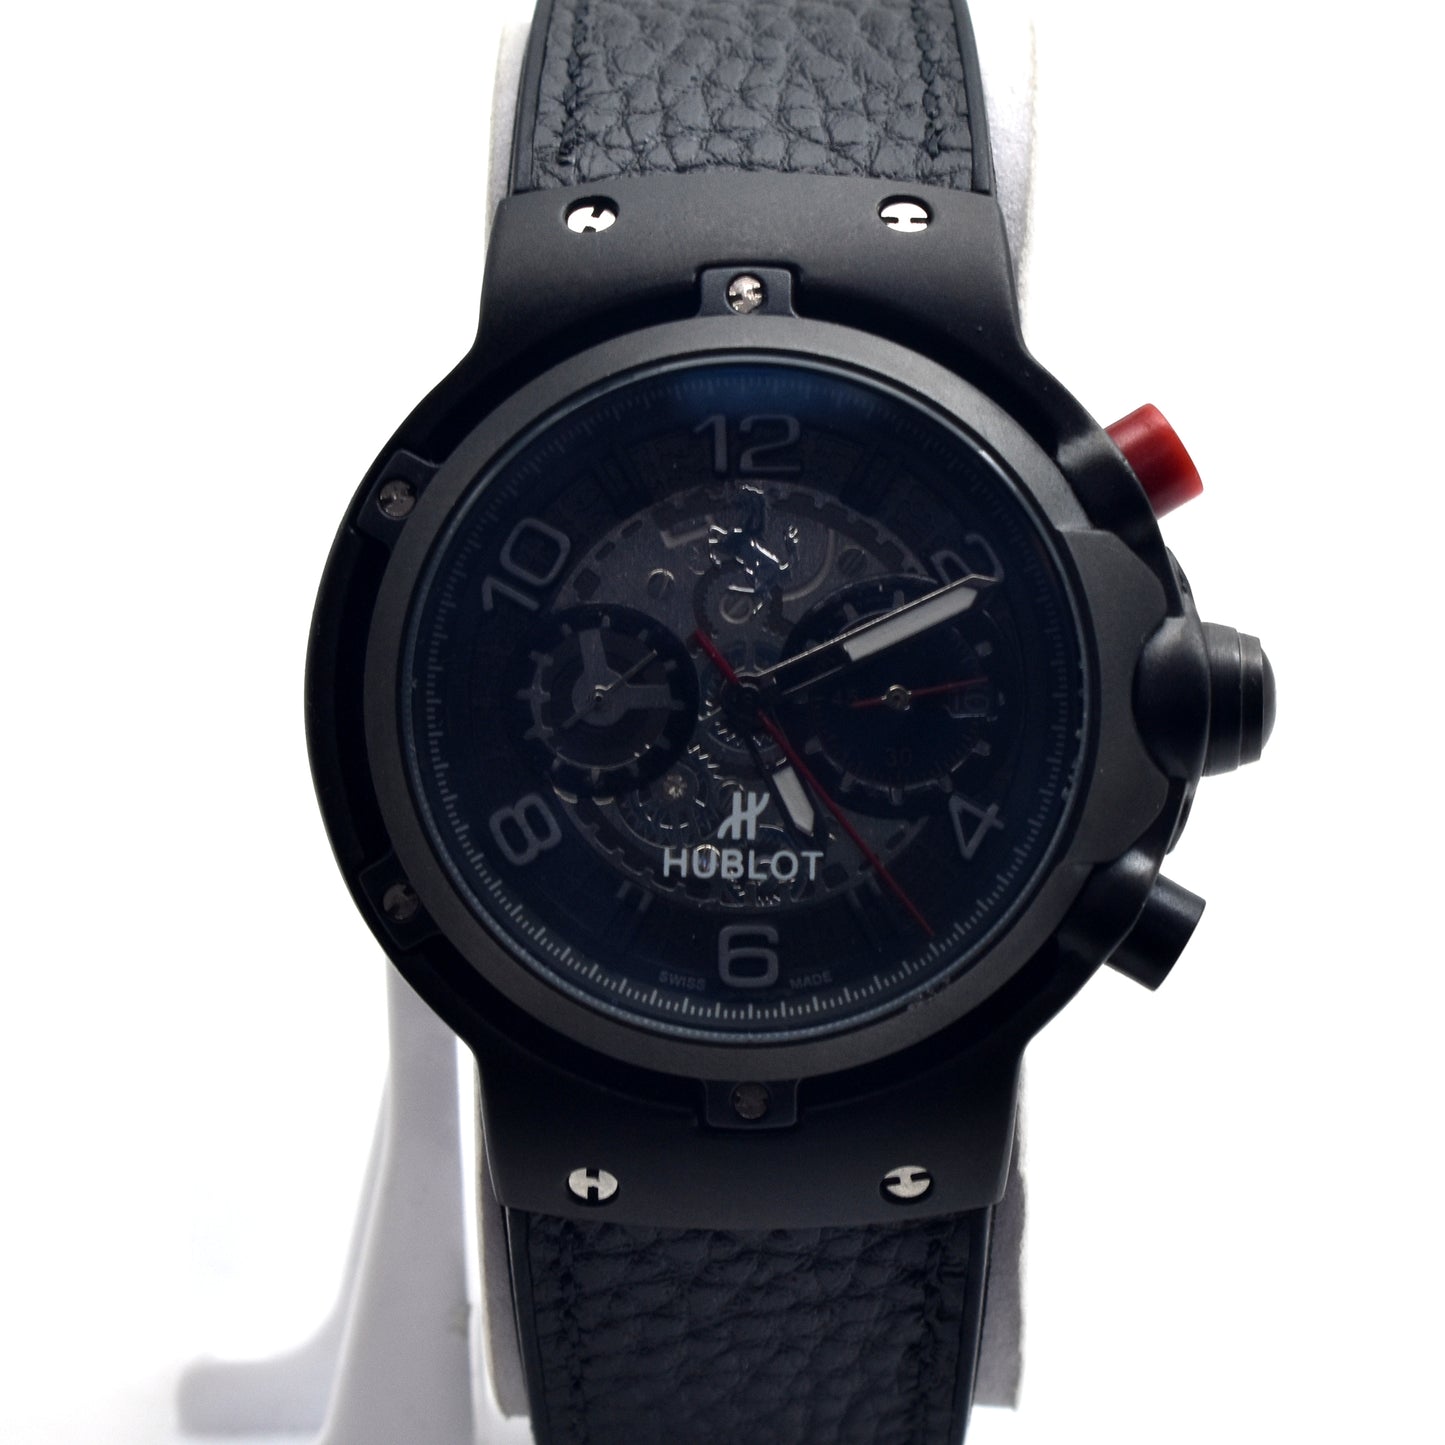 Brand New Premium Quality Watch - #Hublot01